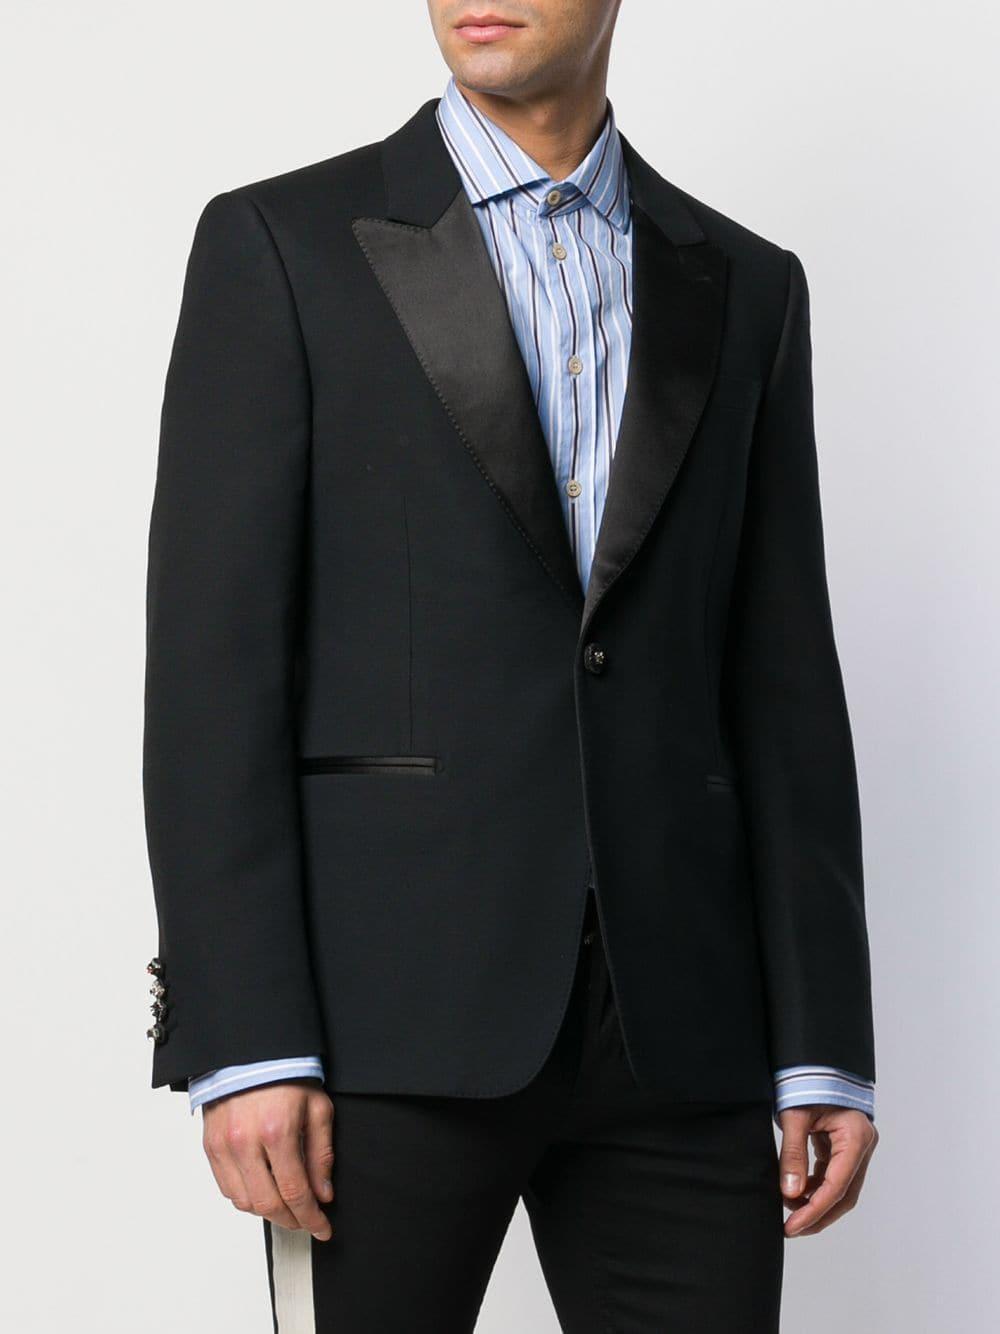 Alexander McQueen Tailored Blazer in Black for Men - Lyst